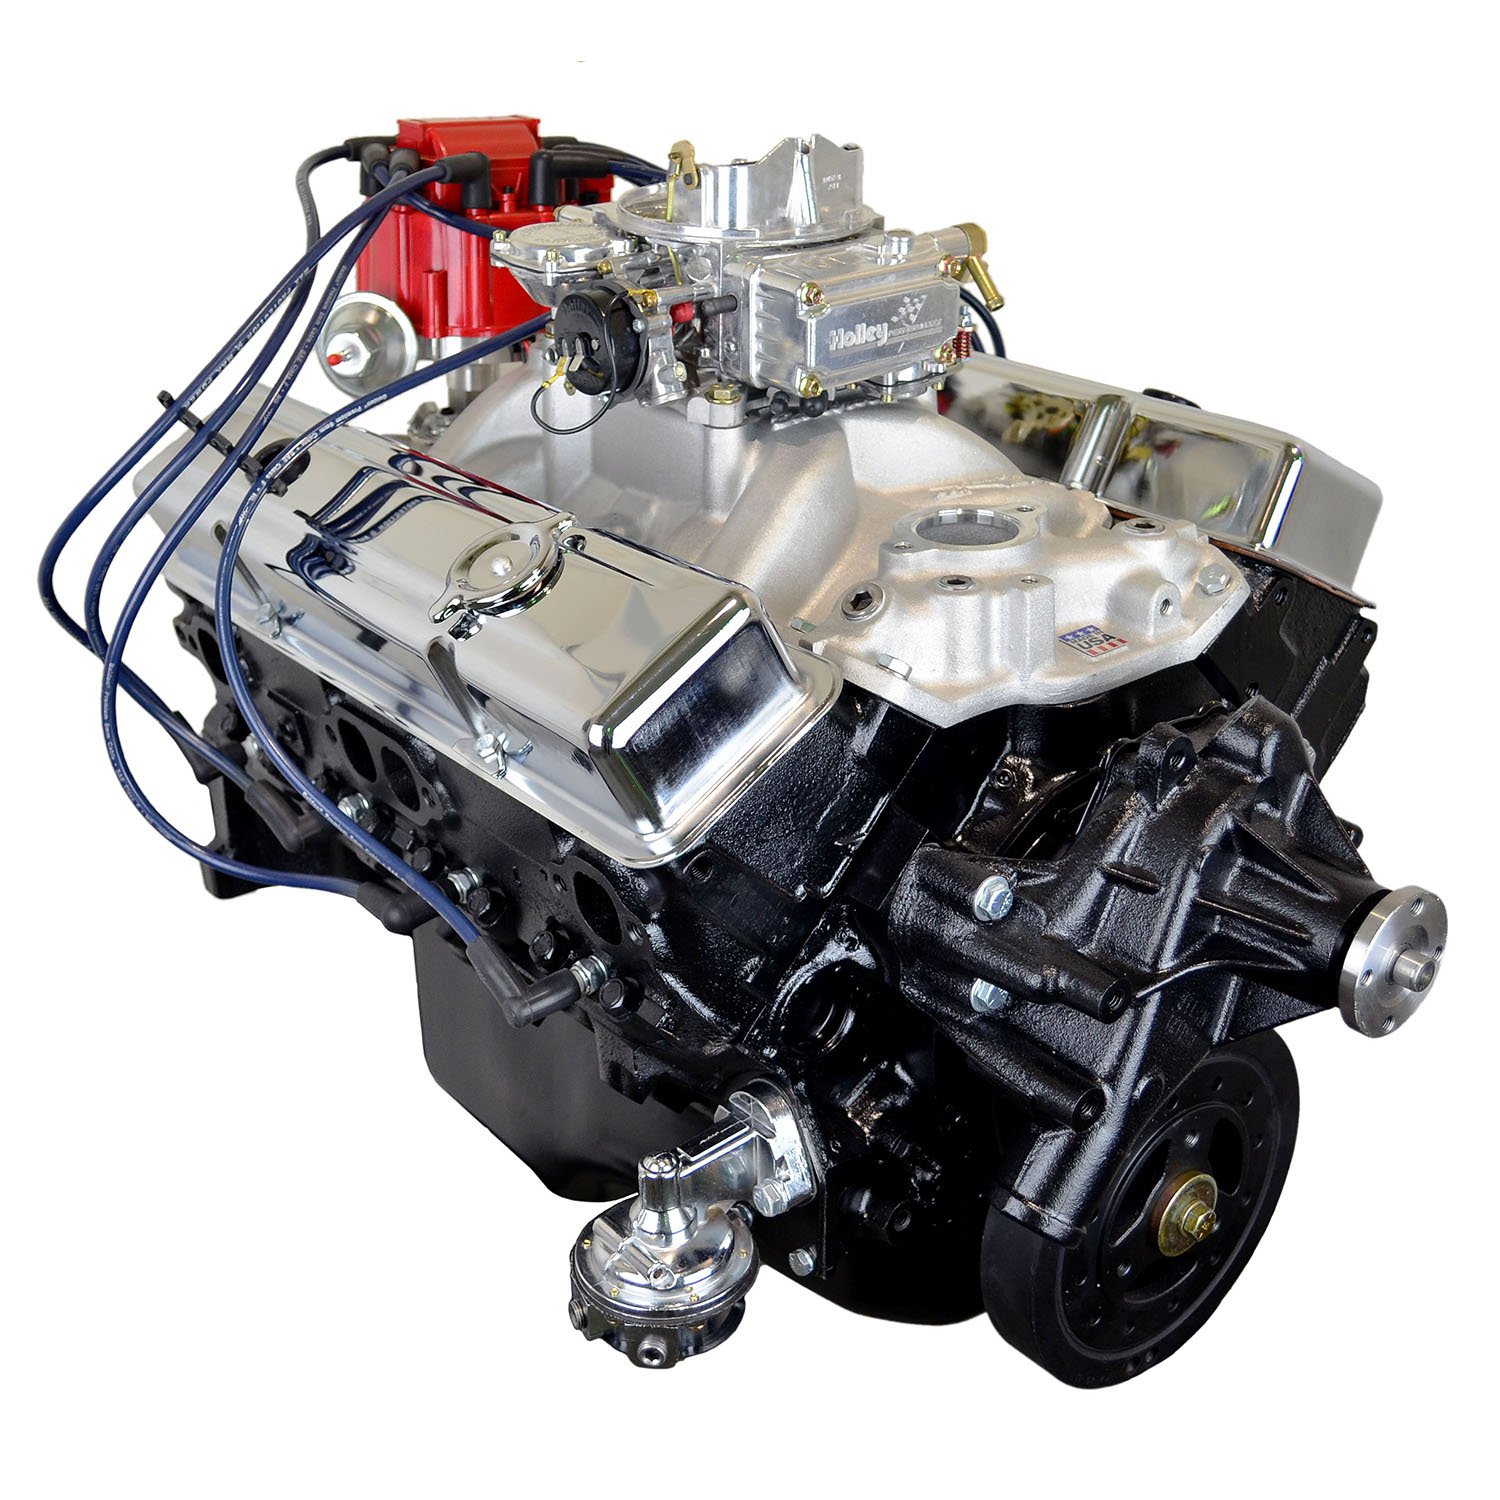 HP291PC High Performance Crate Engine Small Block Chevy 350ci / 330HP / 380TQ